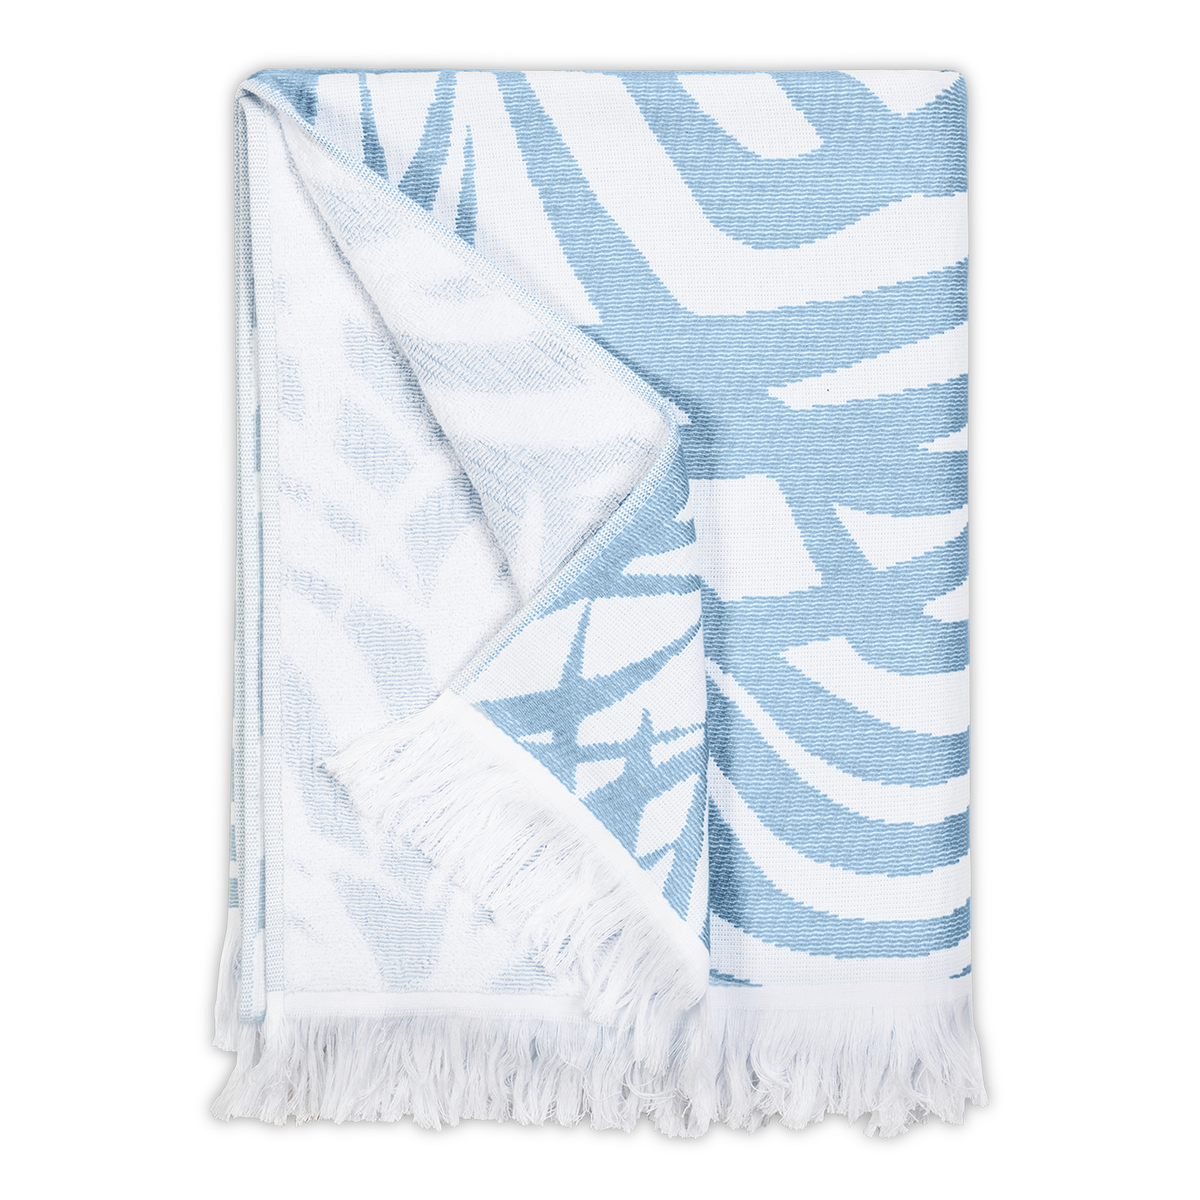 Folded Beach Towel of Matouk Zebra Palm in Color Pool Blue